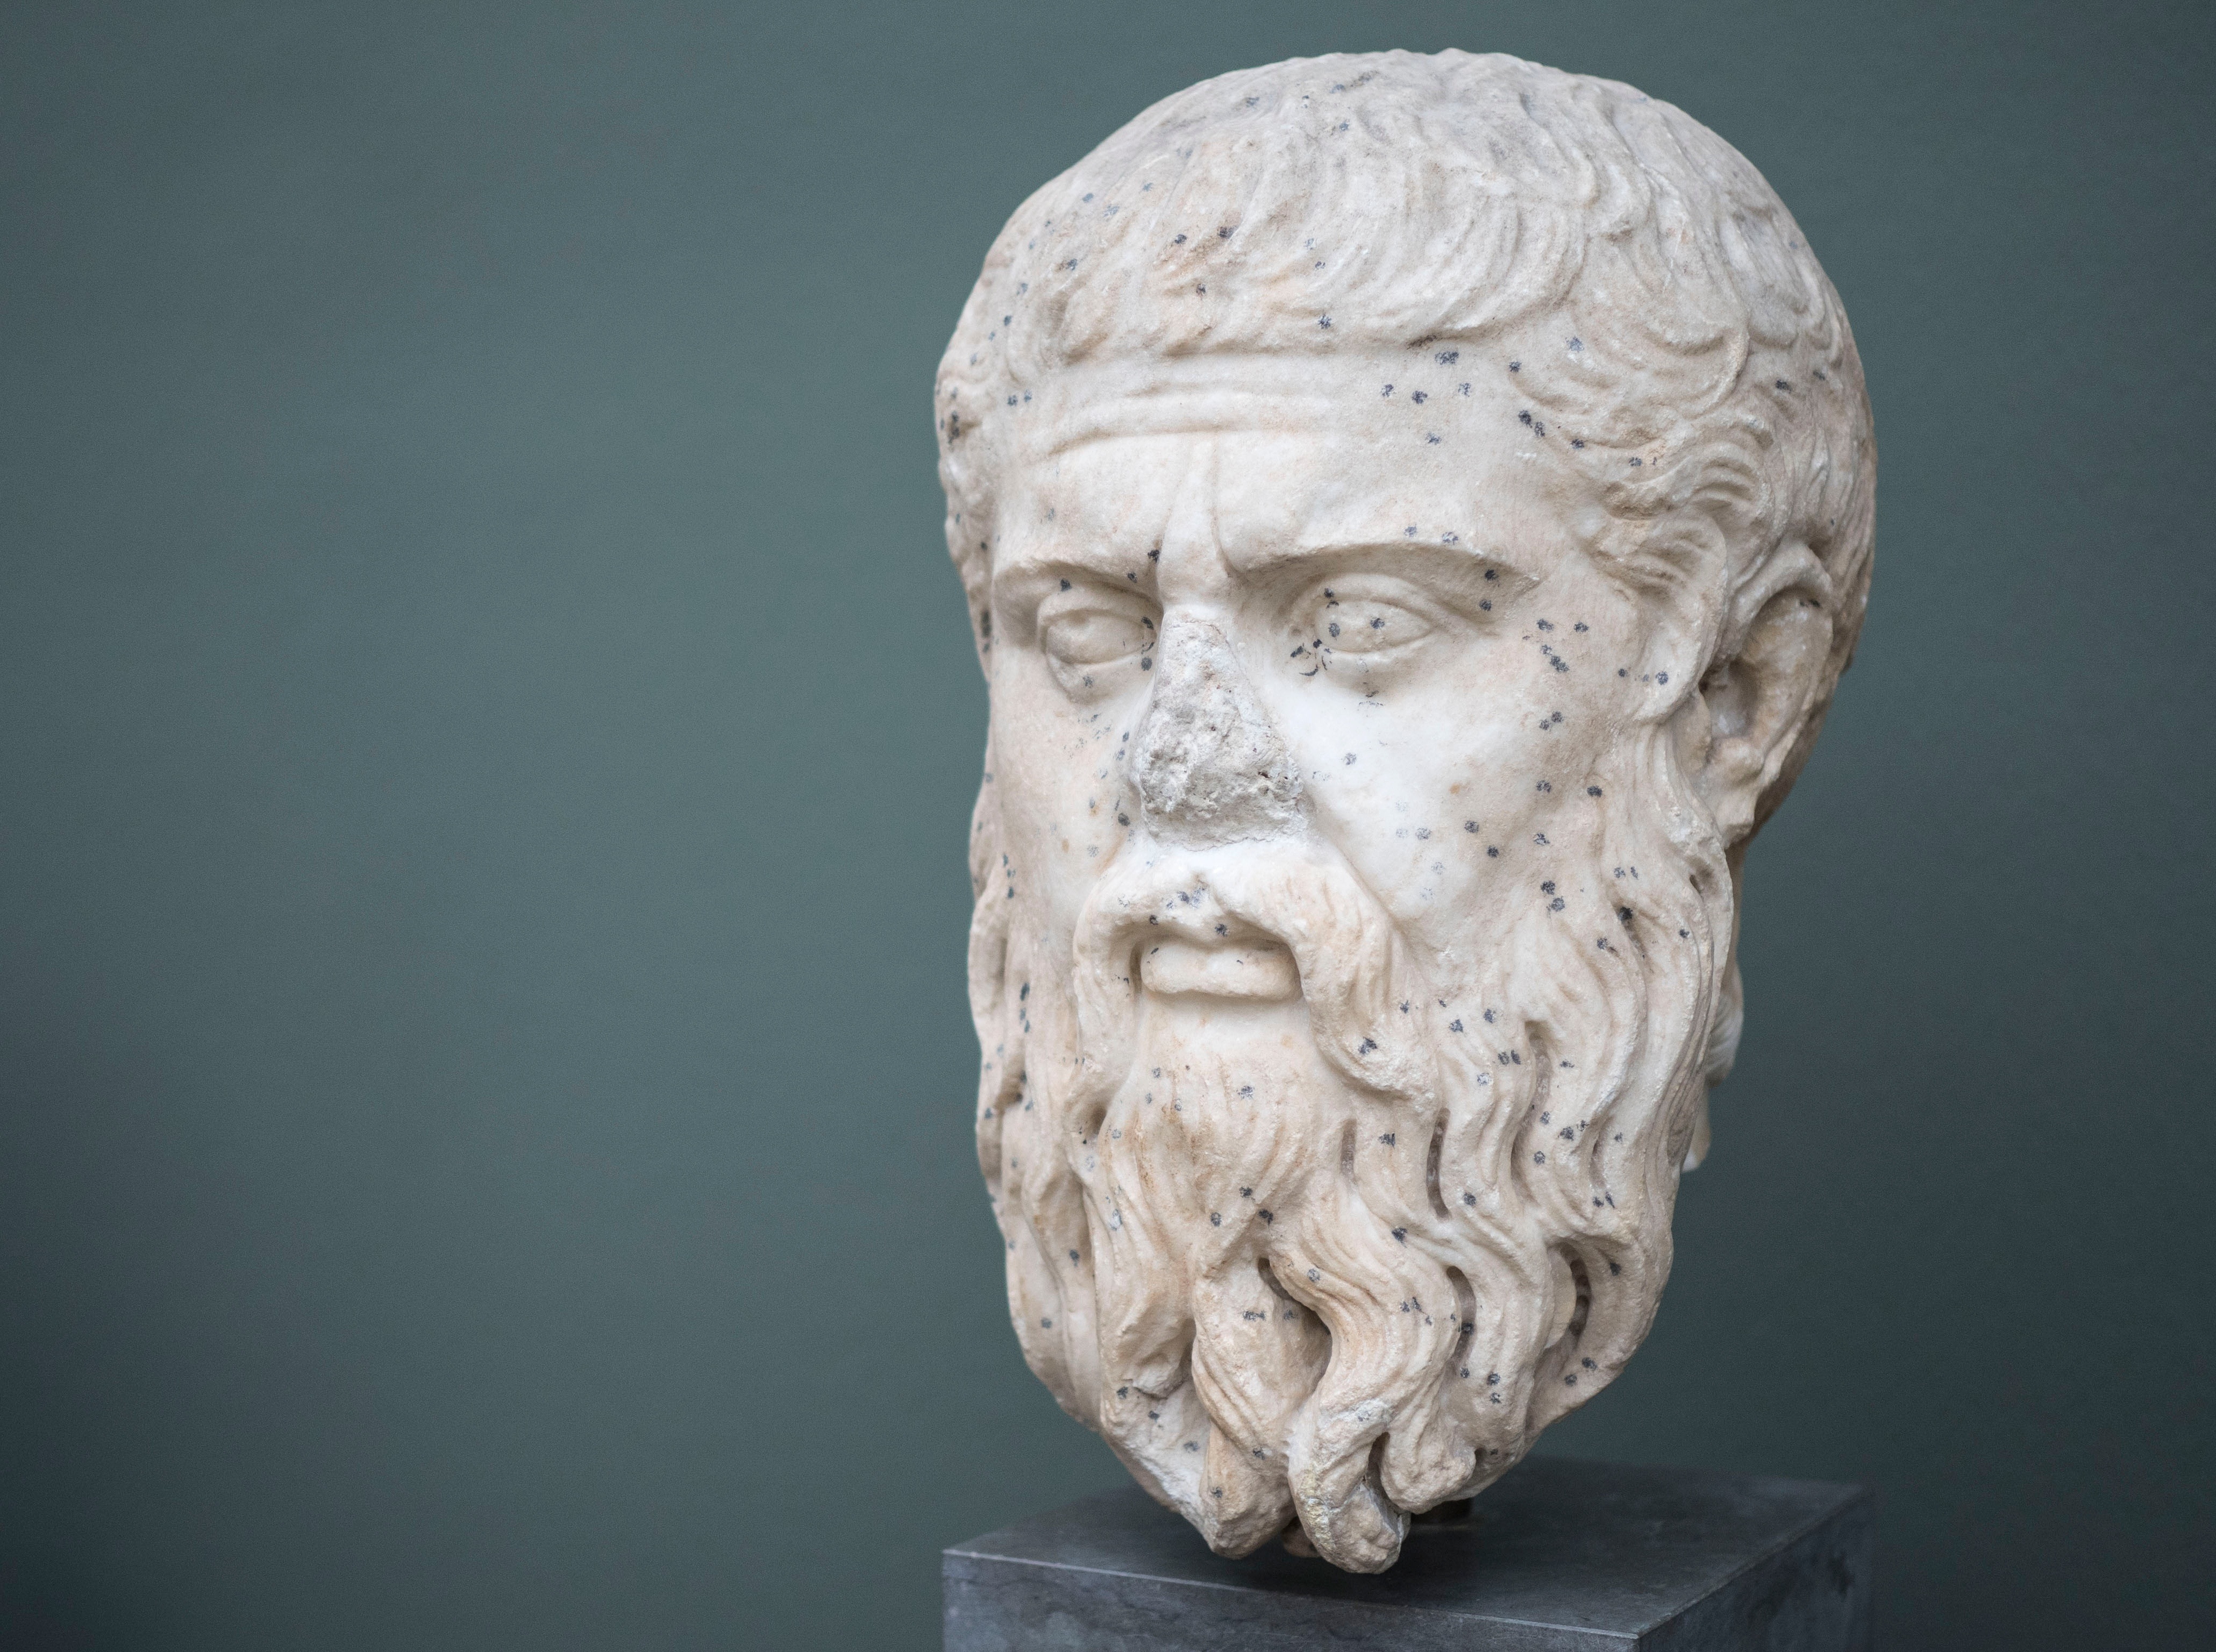 Plato: Maths, Music, and Cosmology